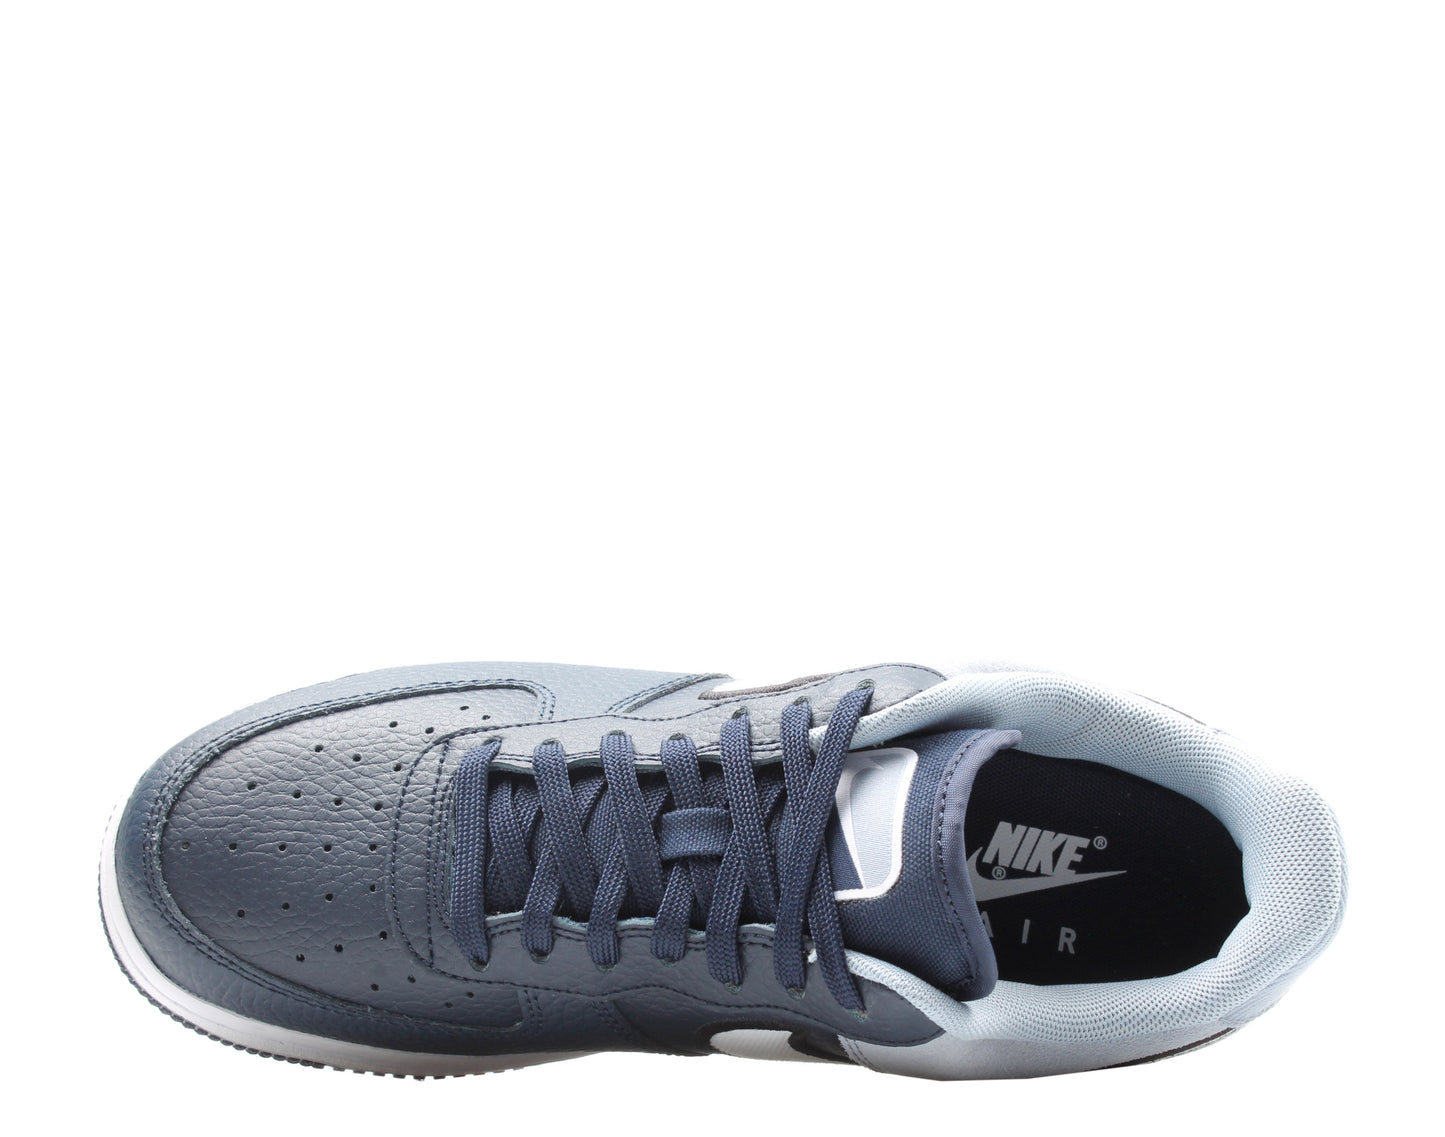 Nike Air Force 1 '07 LV8 1 Obsidian Mist Men's Basketball Shoes AO2439-400